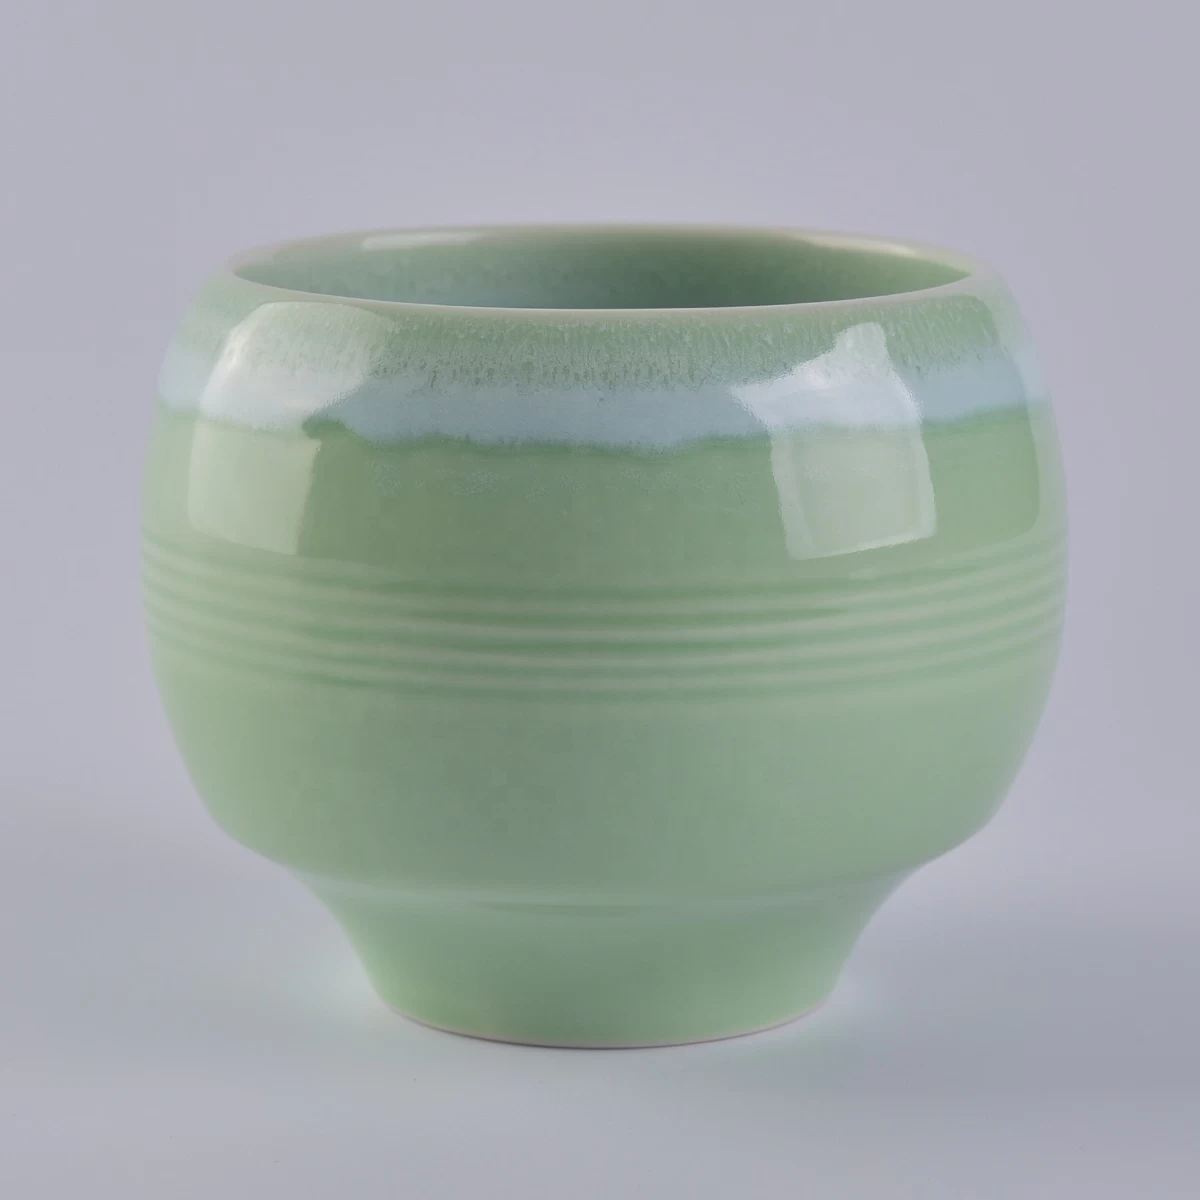 10oz Sunny custom decorative round luxury ceramic jar for candle